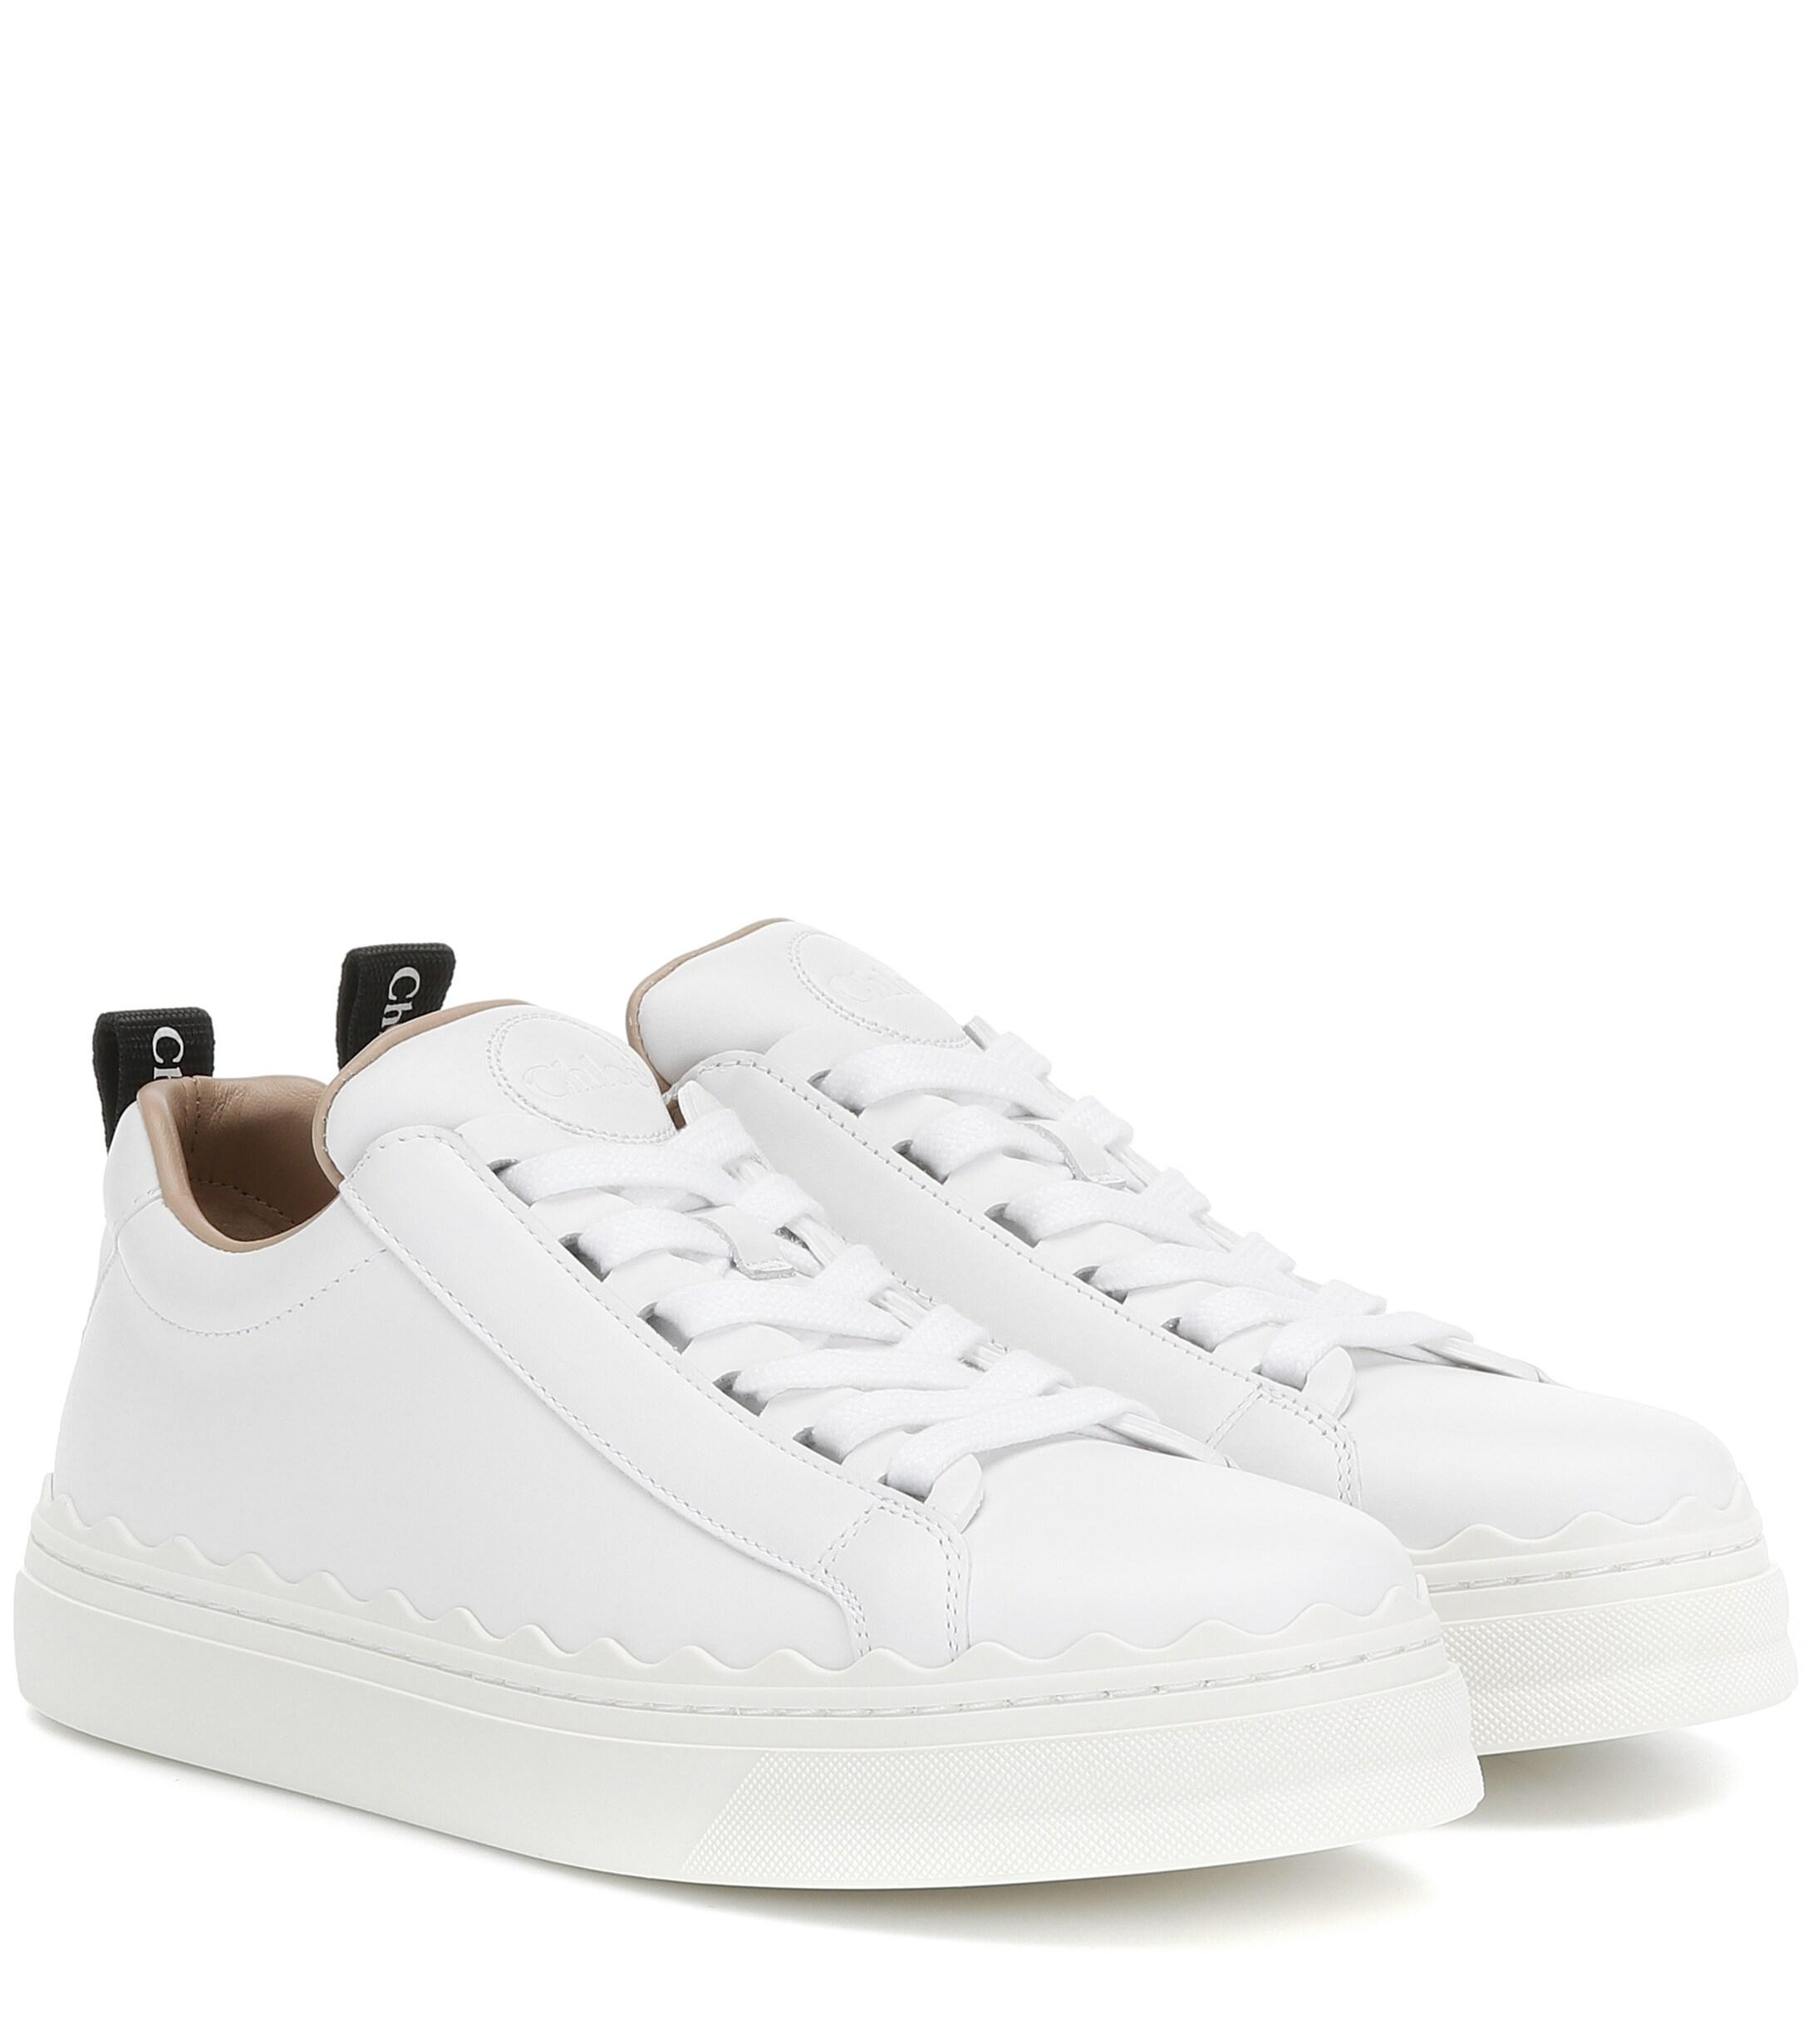 Chloé Lauren Leather Sneakers in White - Lyst